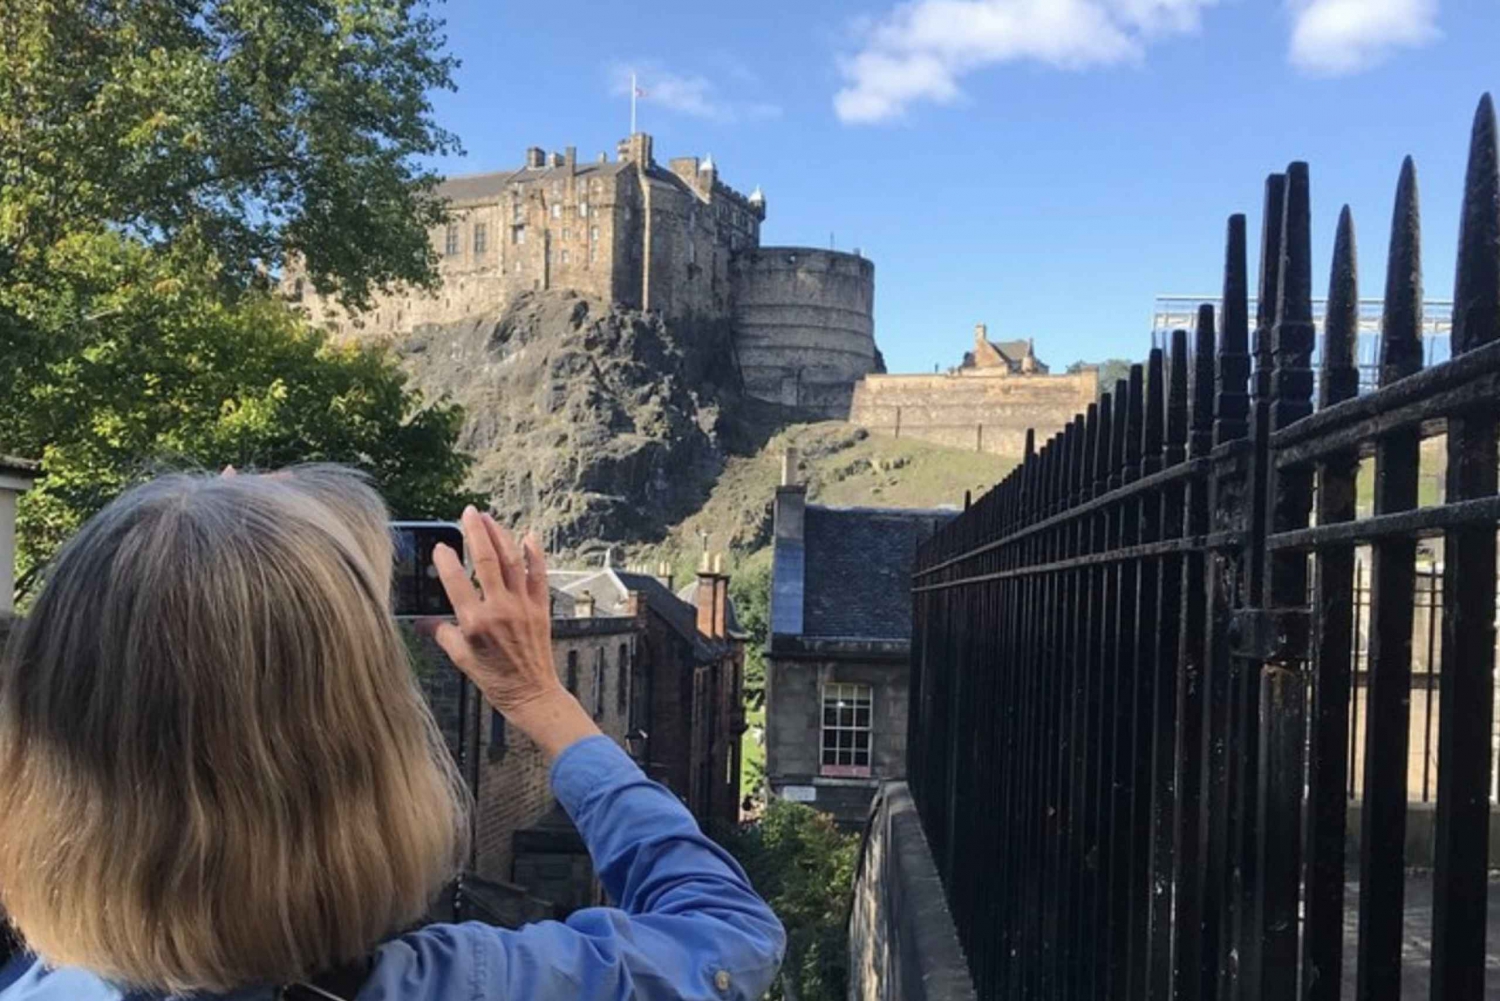 Desde Edimburgo: Visita privada a la ciudad de Edimburgo en monovolumen de lujo